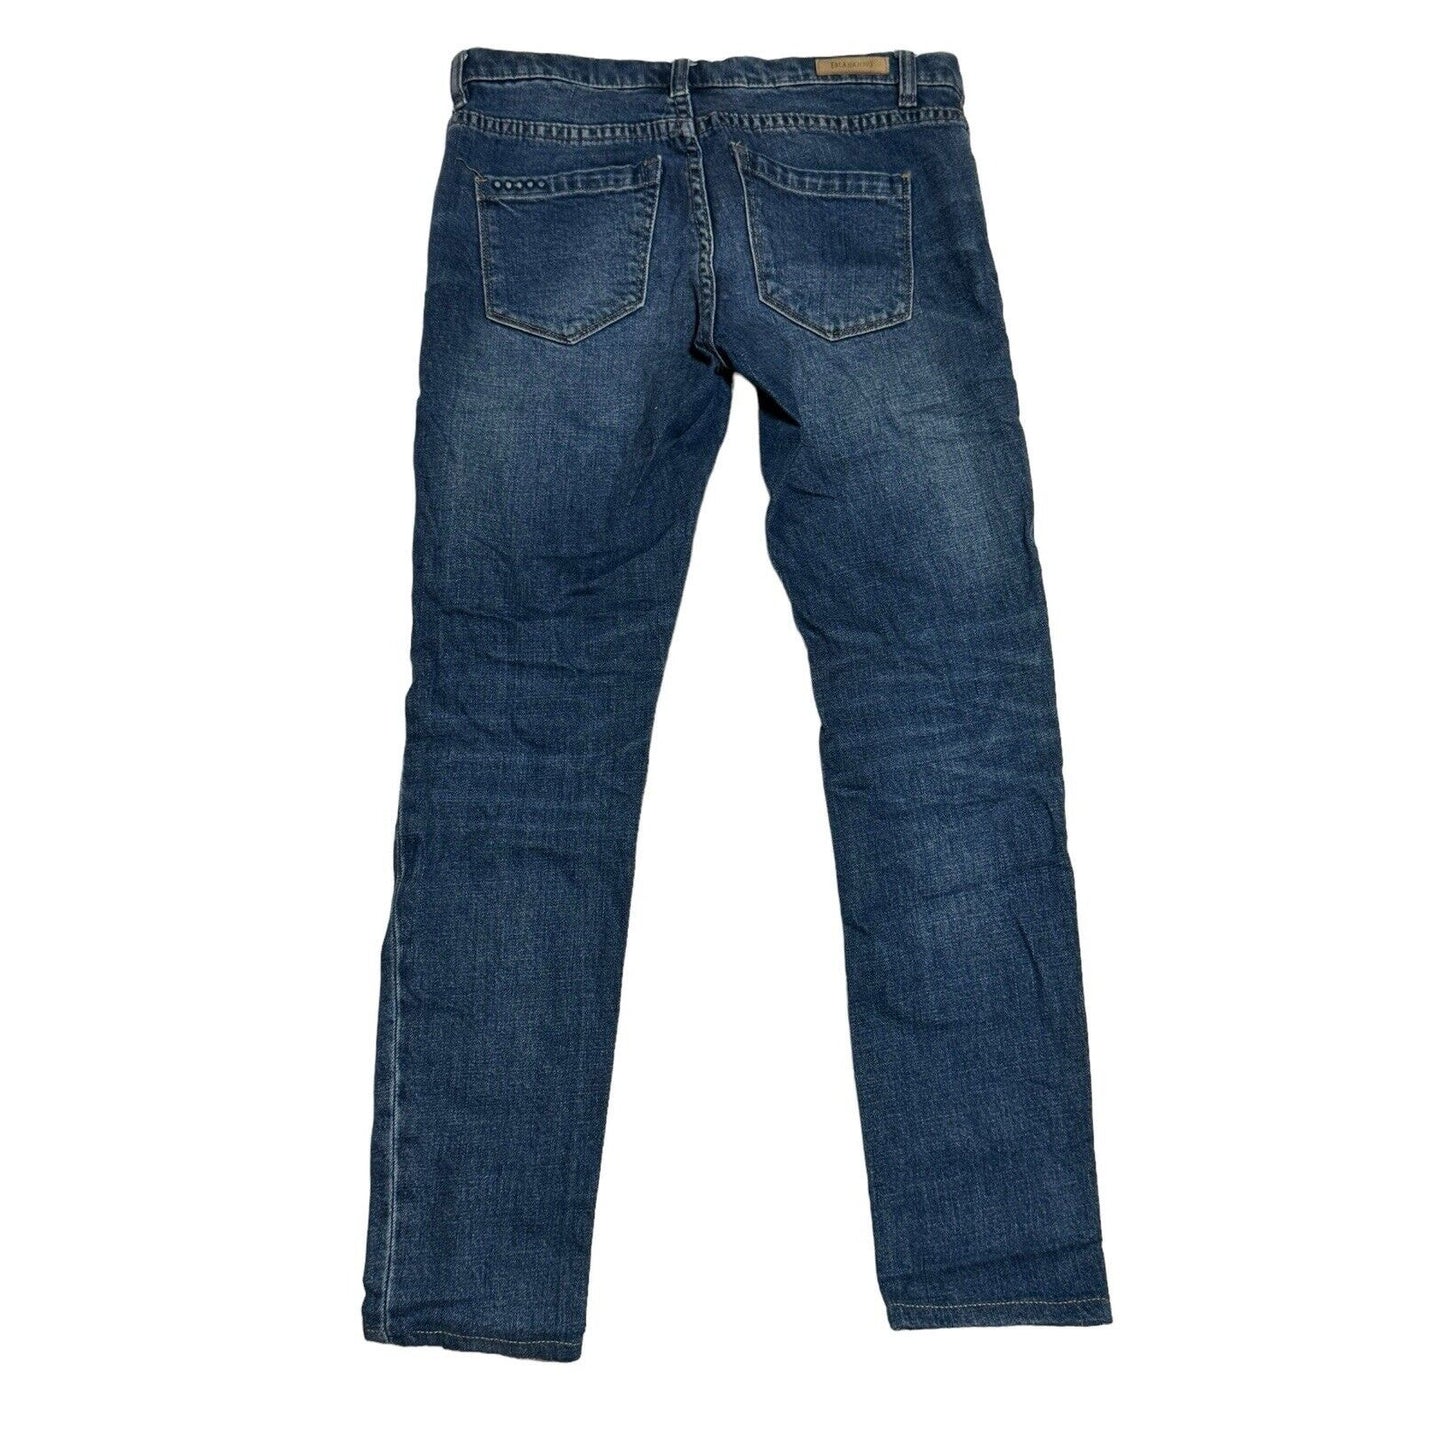 Blank NYC Skinny Classique Medium Wash Denim Jeans Size 26